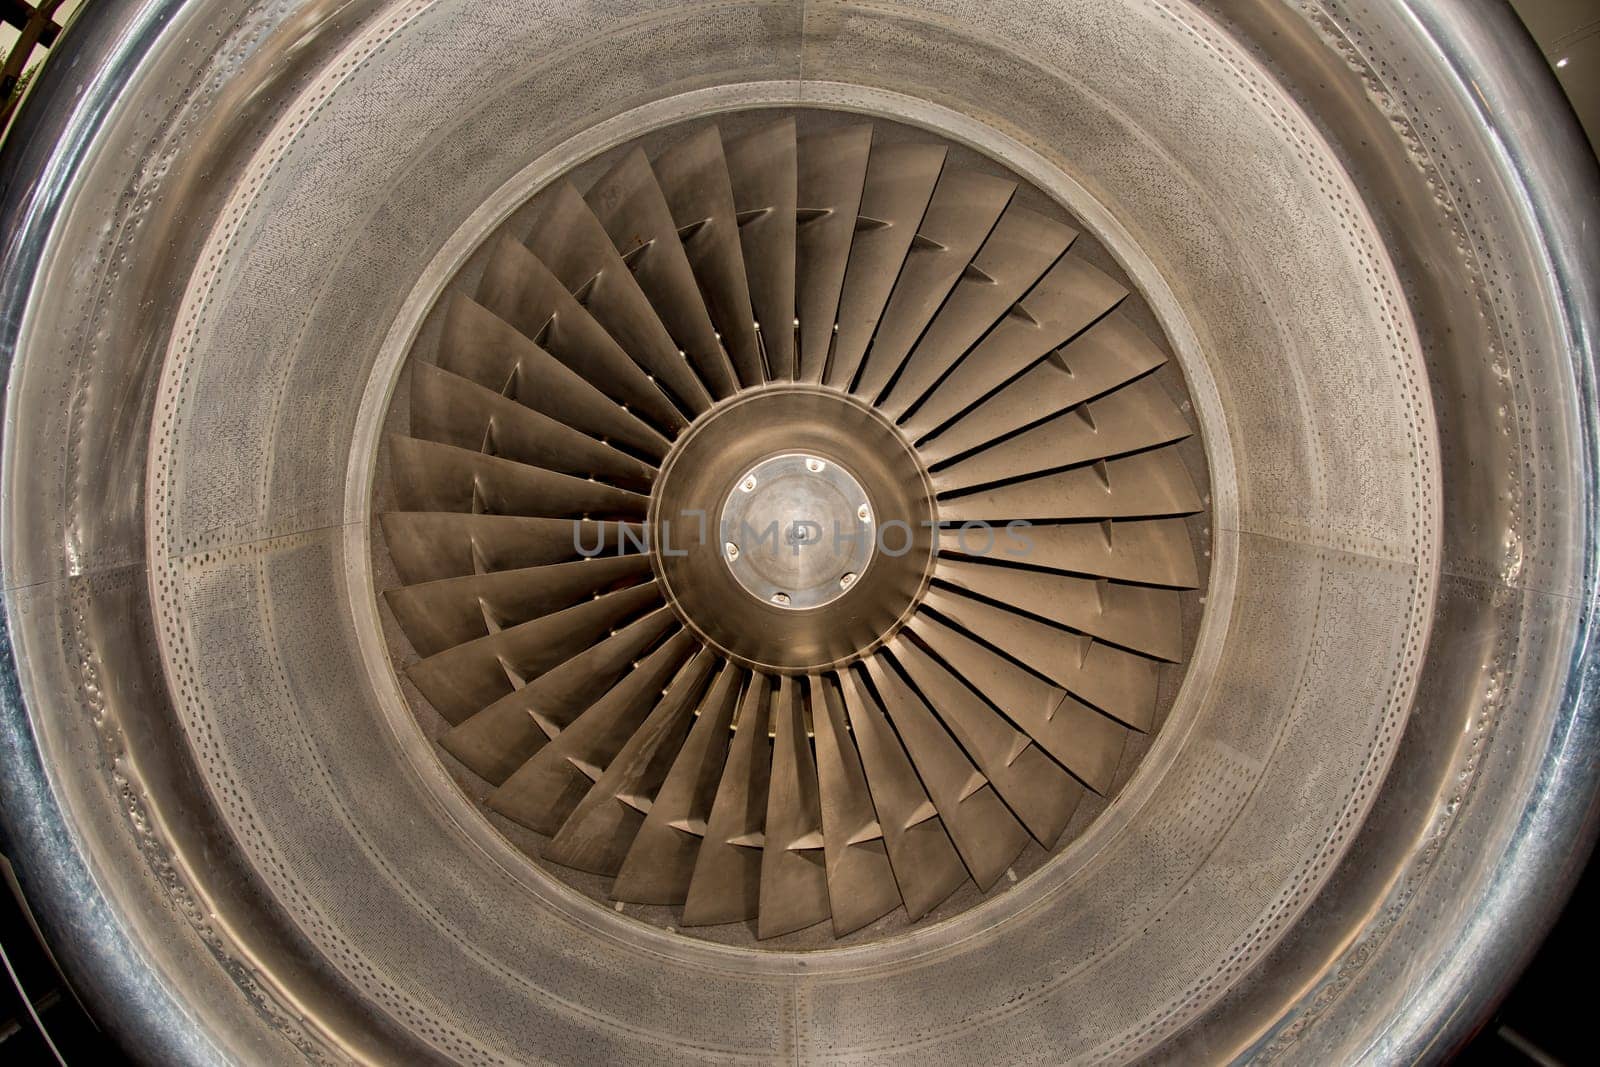 Airplane Jet gas turbine engine detail